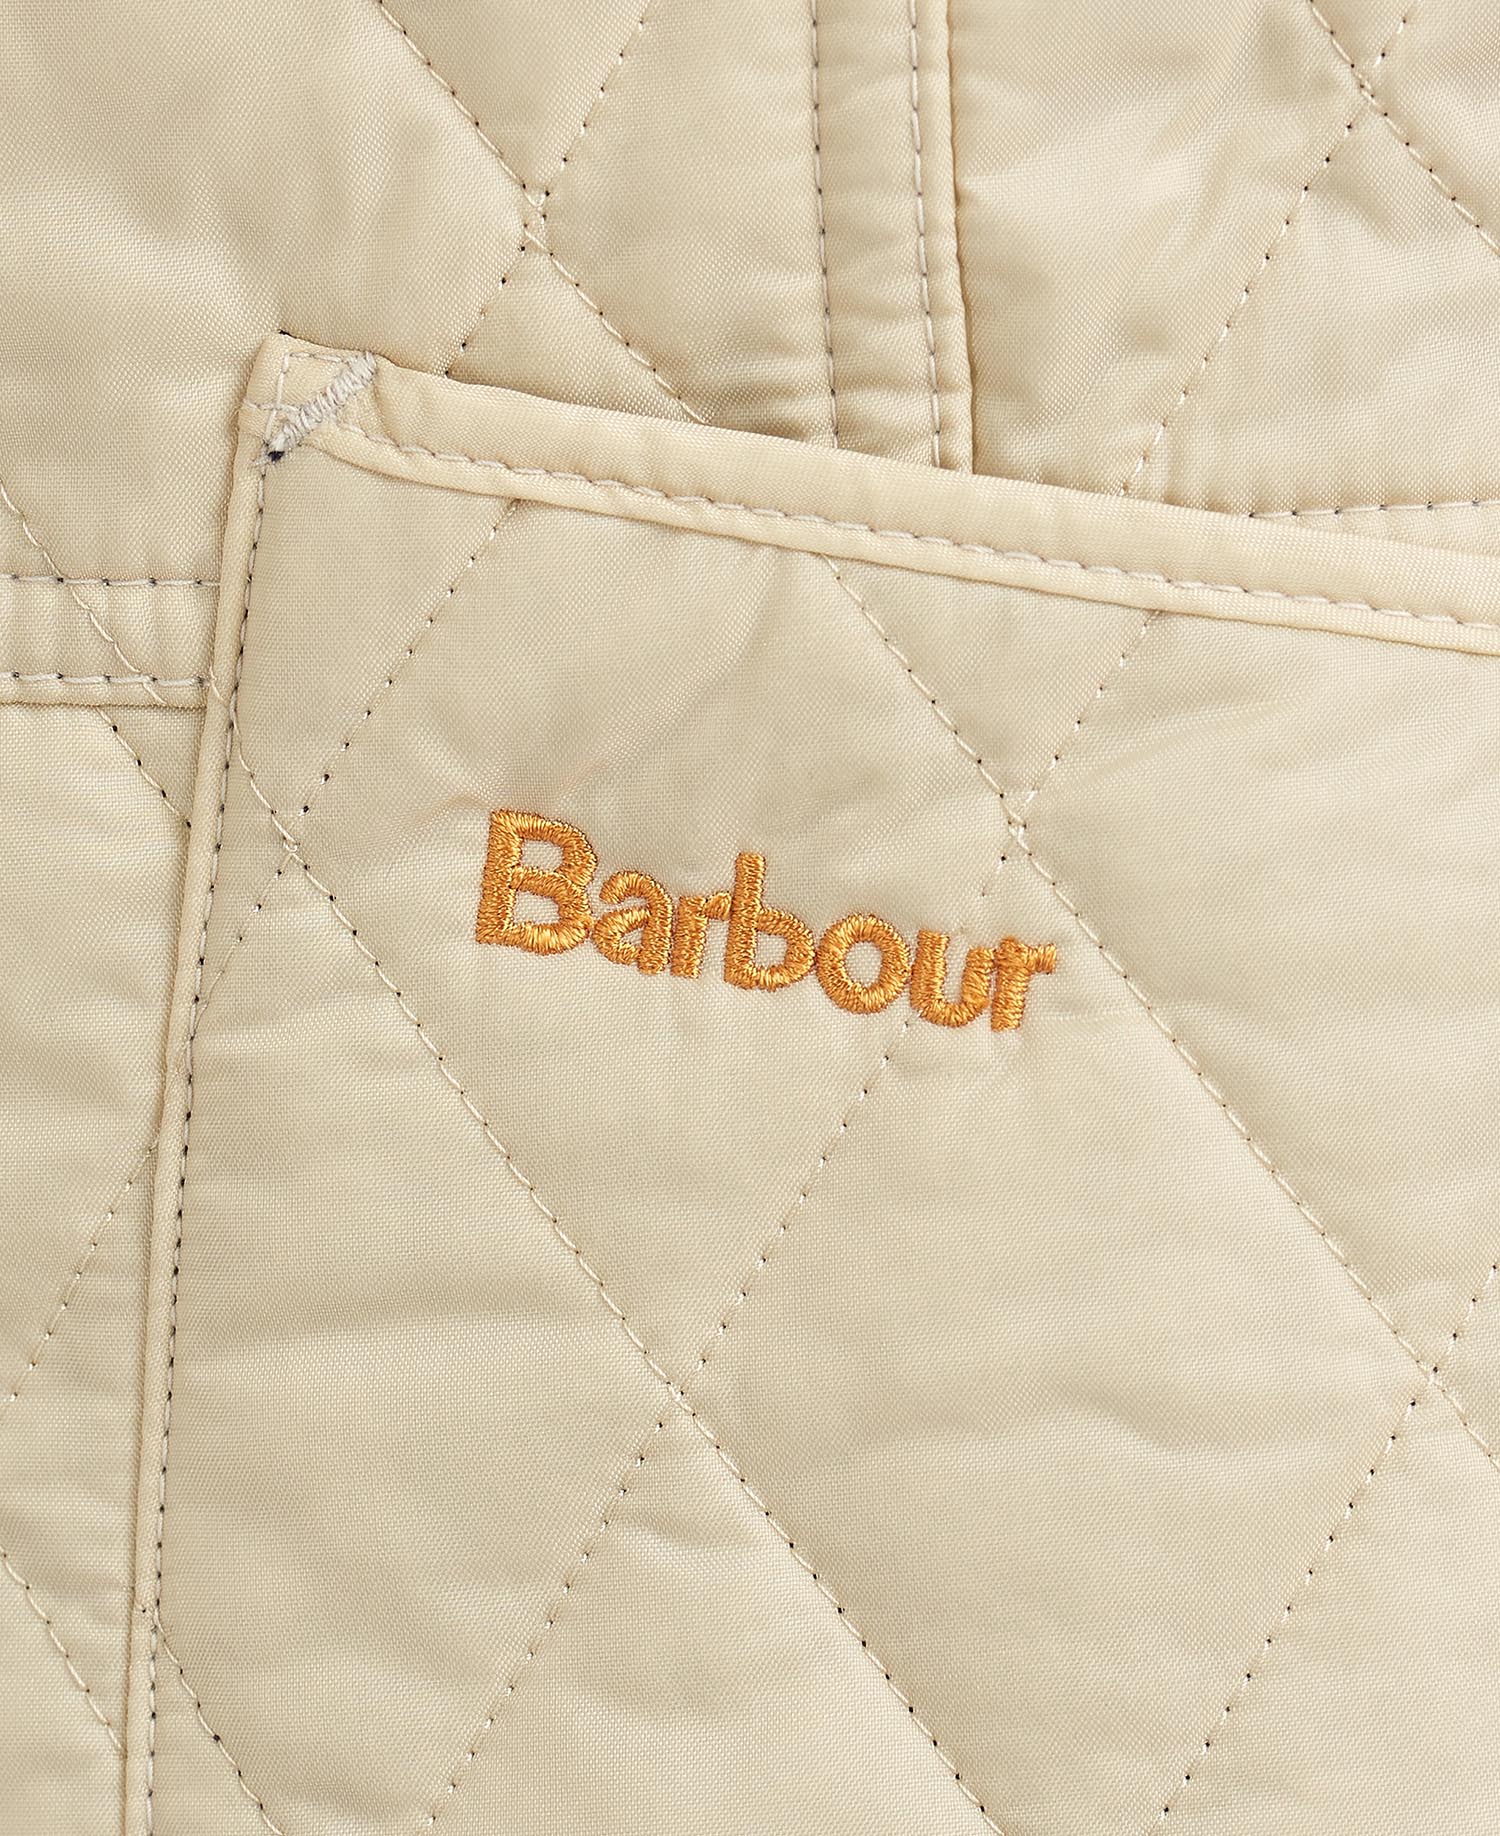 Barbour Summer Liddesdale Quilted Jacket